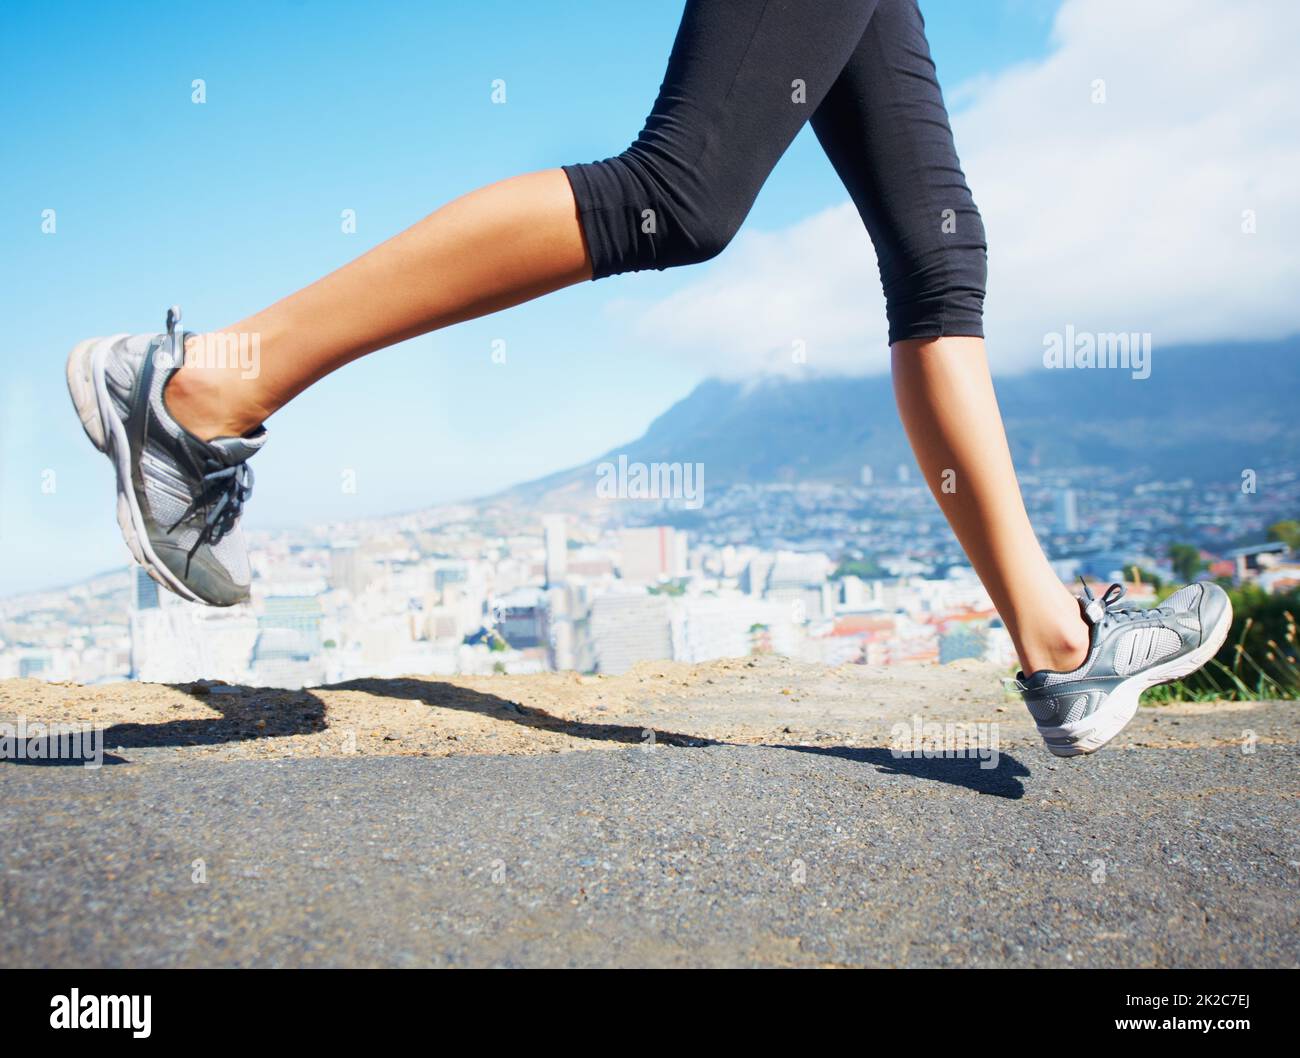 Corredor de carretera. Fotografía recortada de una mujer deportiva que va a correr al aire libre. Foto de stock